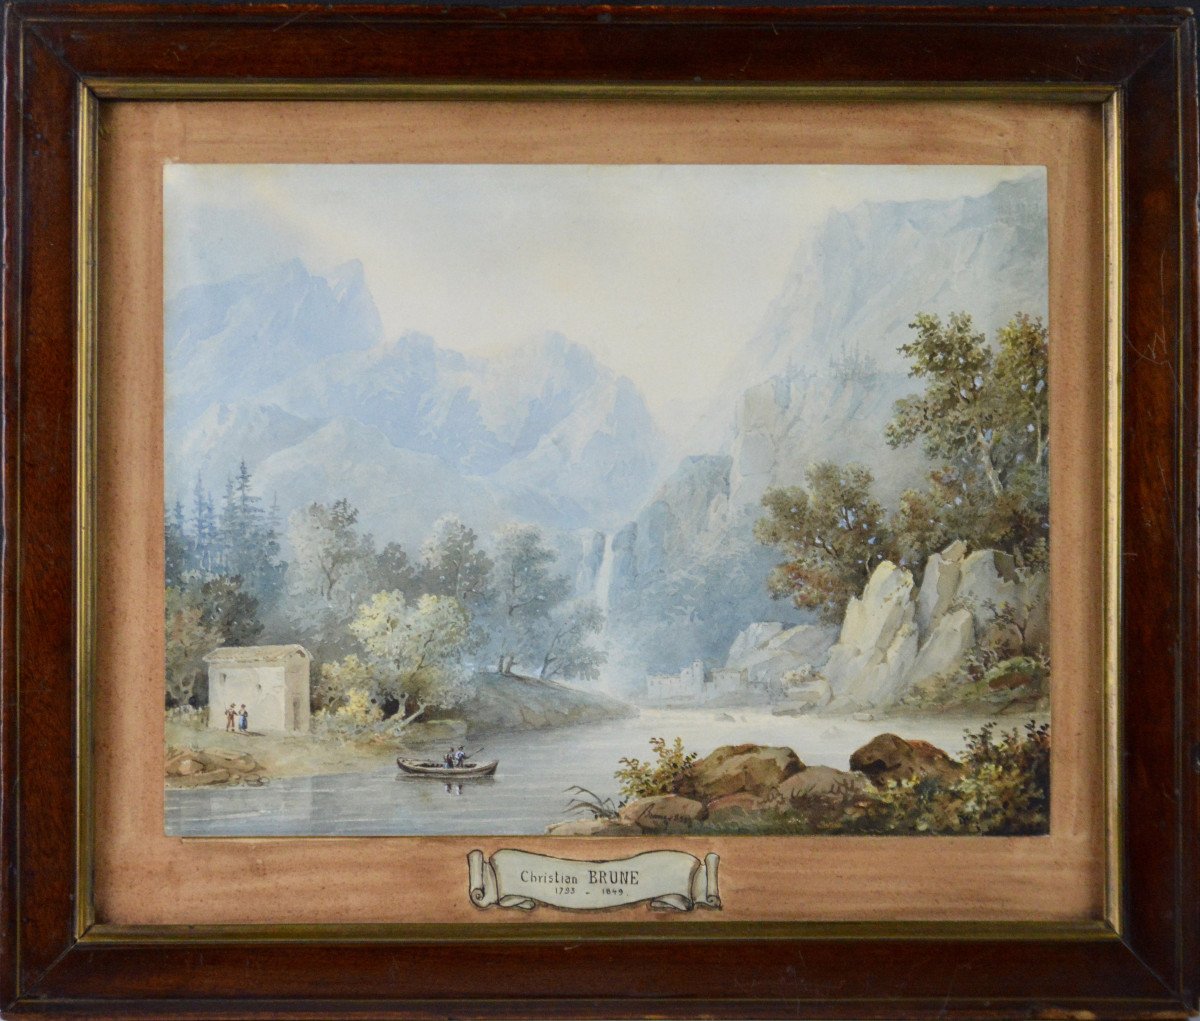 Christian Brune 1793-1849. "mountainous Landscape."